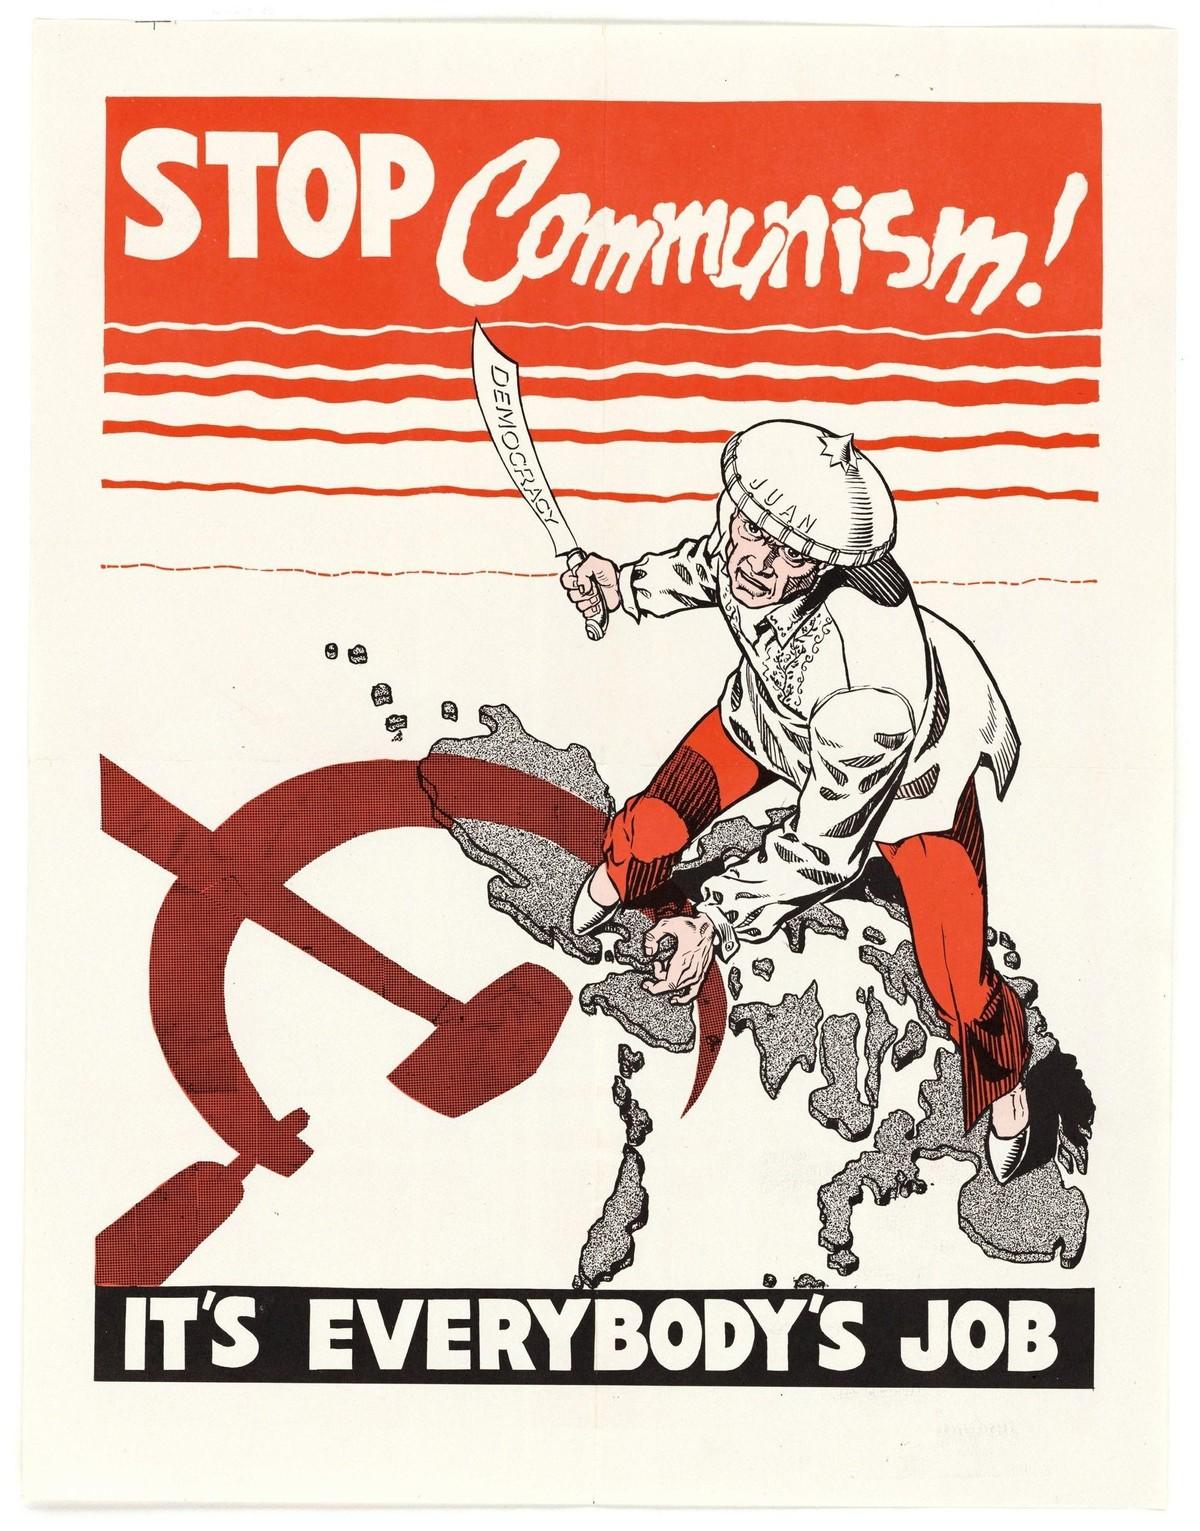 Anonyme, affiche américaine anti-communiste, 1951